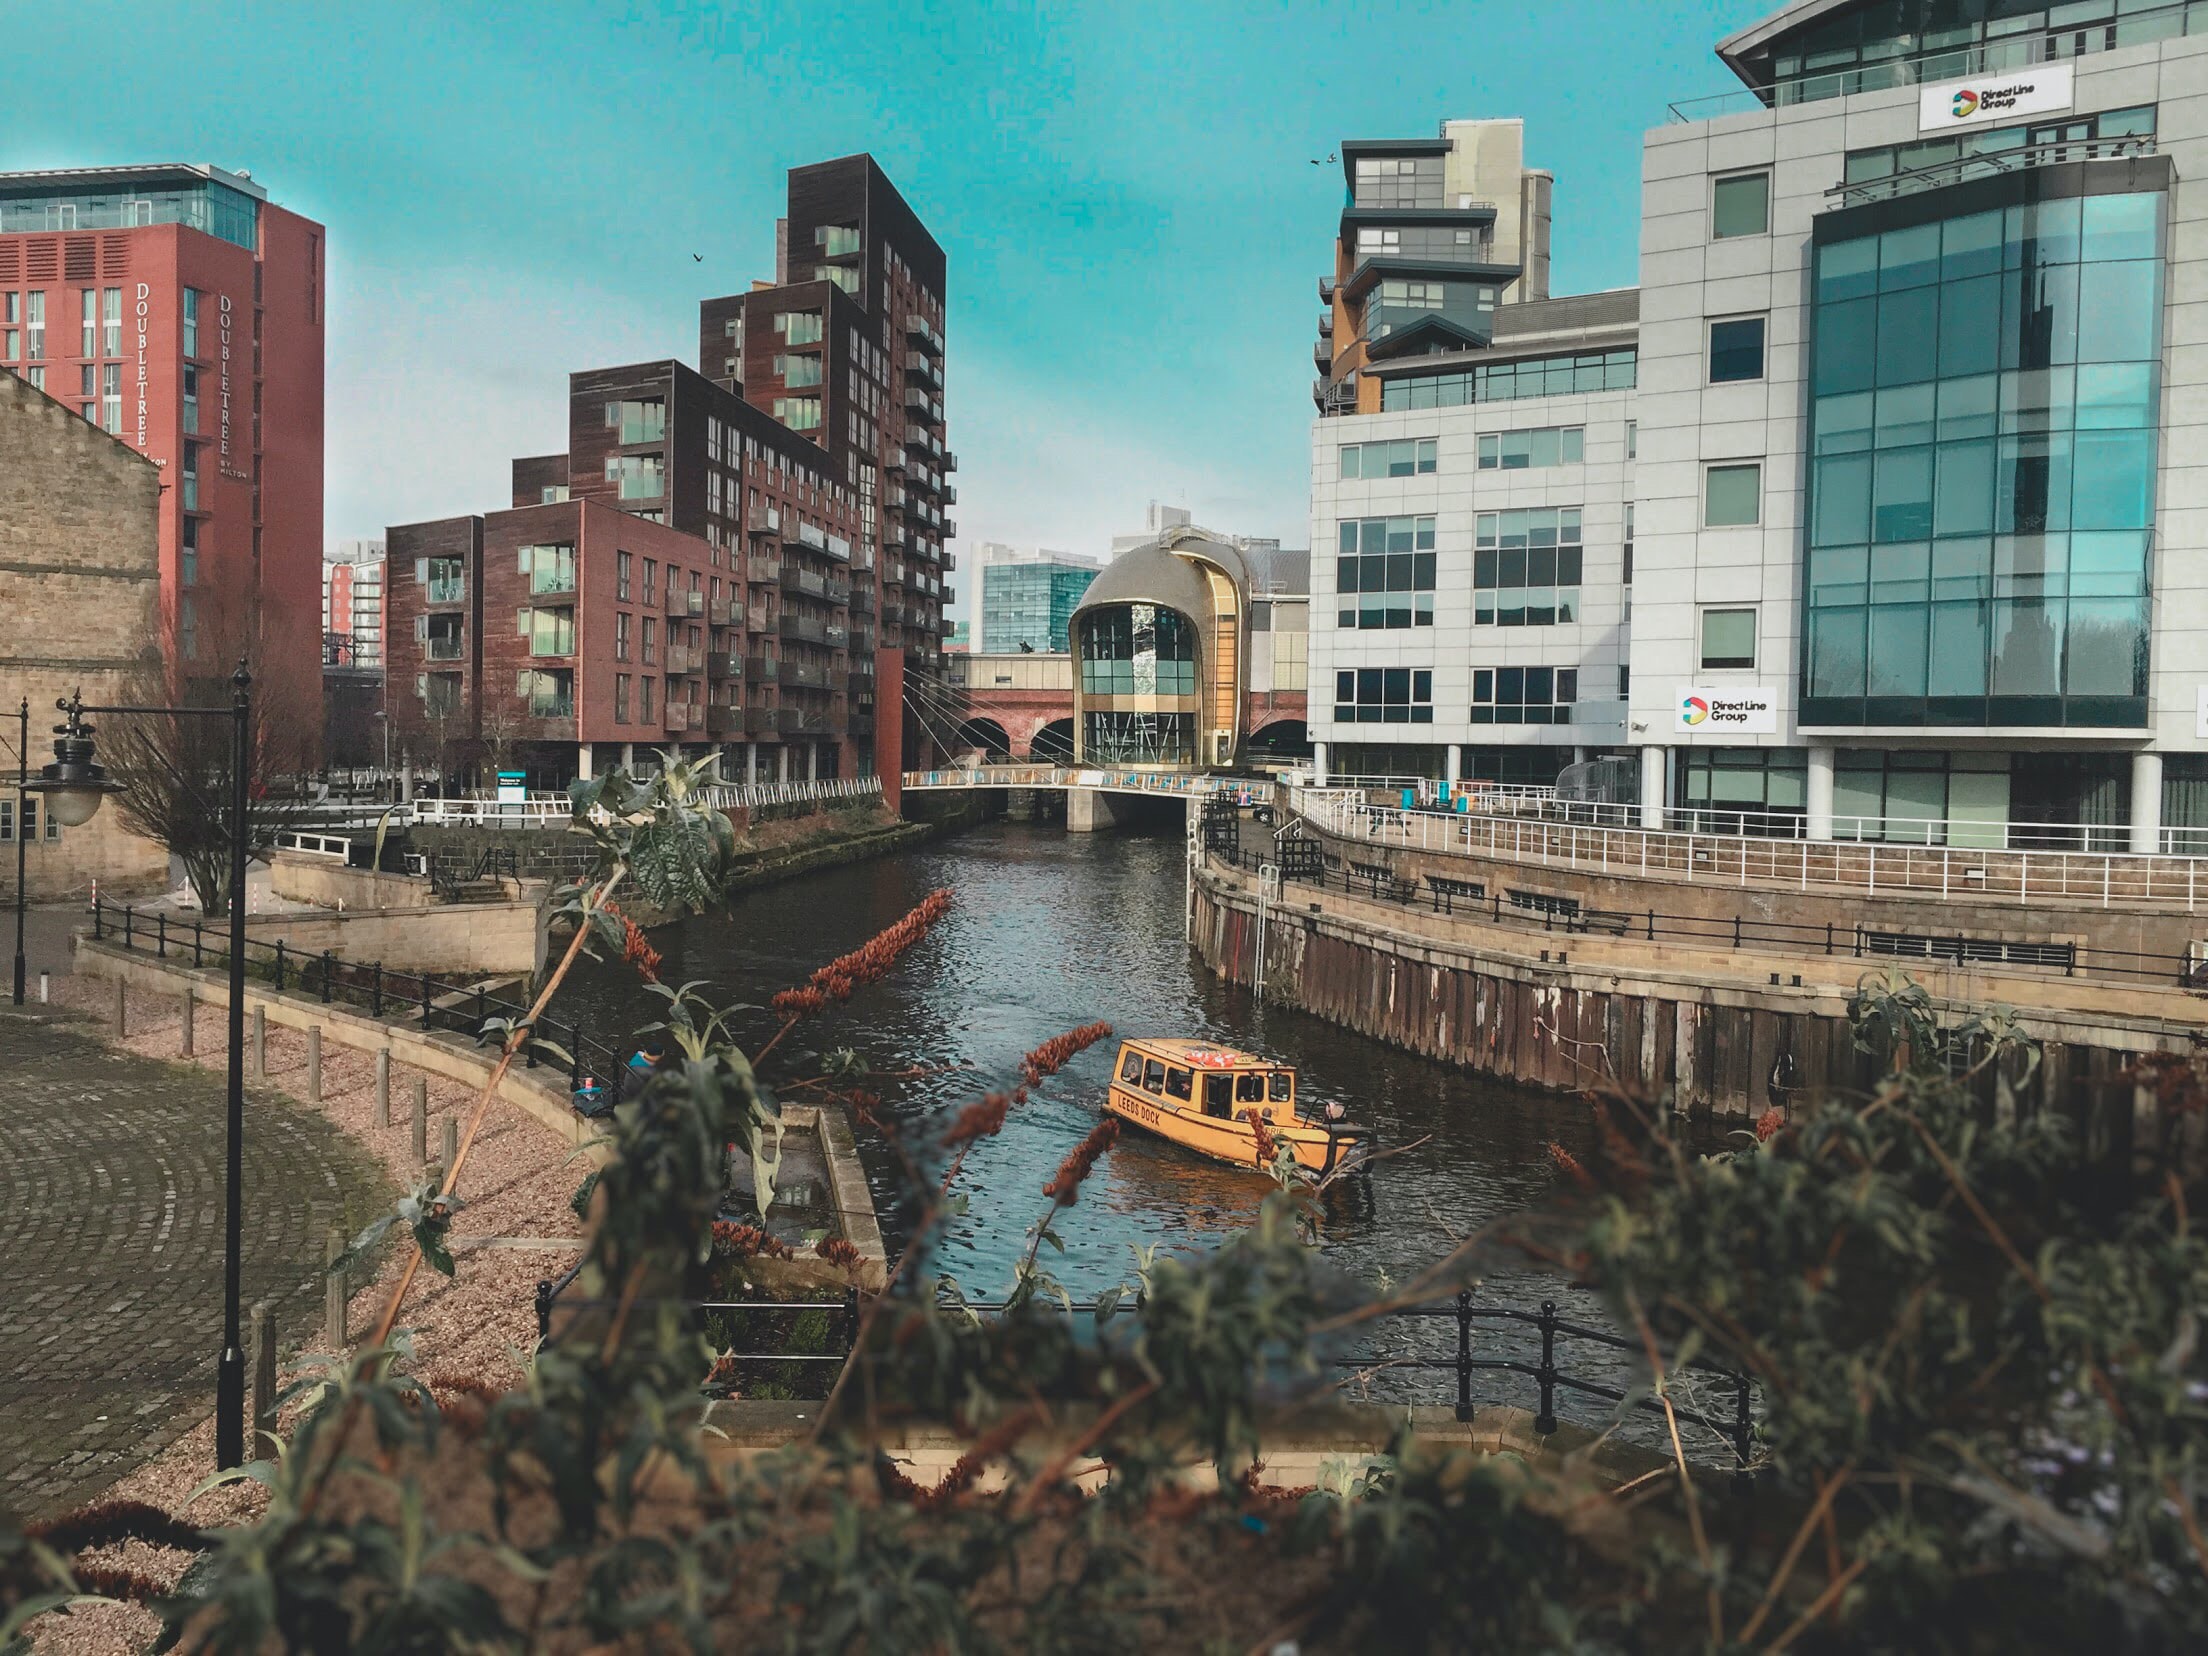 Leeds canal centre